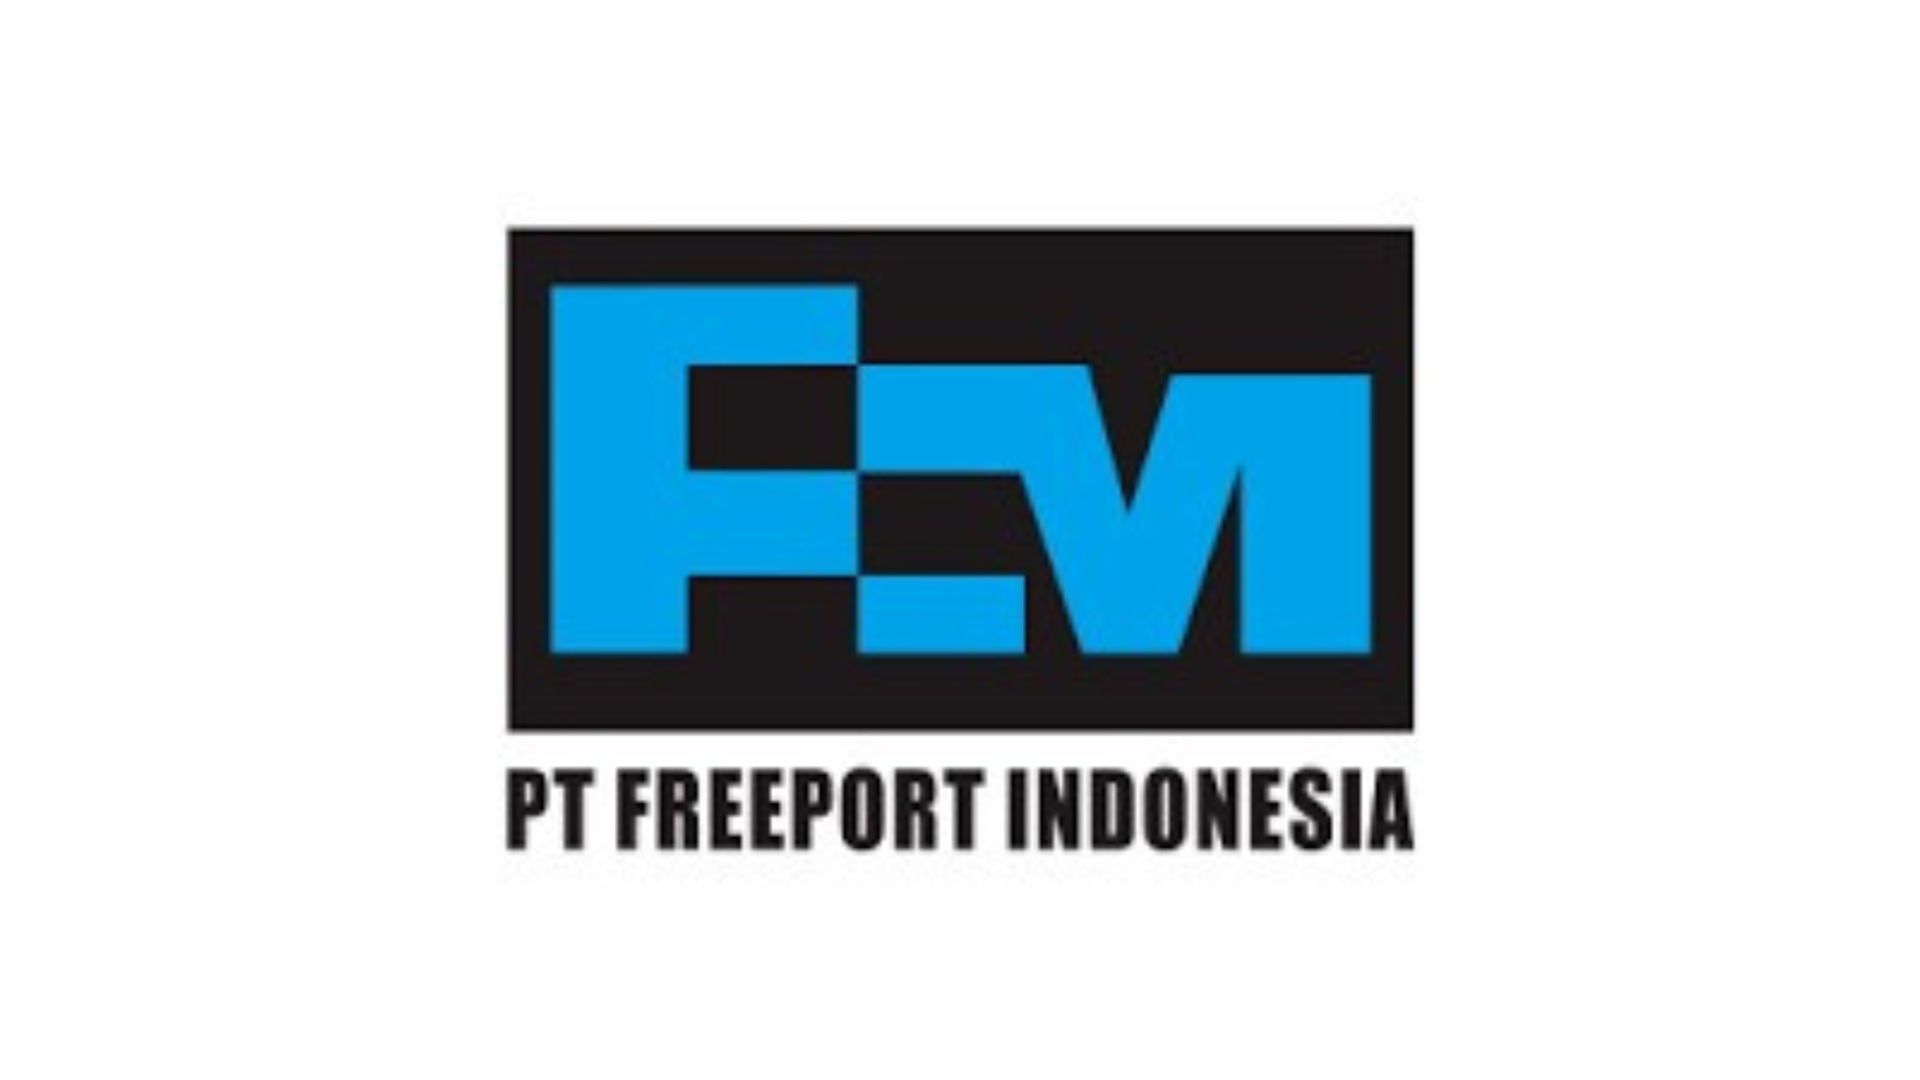 LOKER BUMN! Ada Lowongan Kerja yang Terbuka Untuk Semua Jurusan, Salah Satunya PT Freeport Indonesia